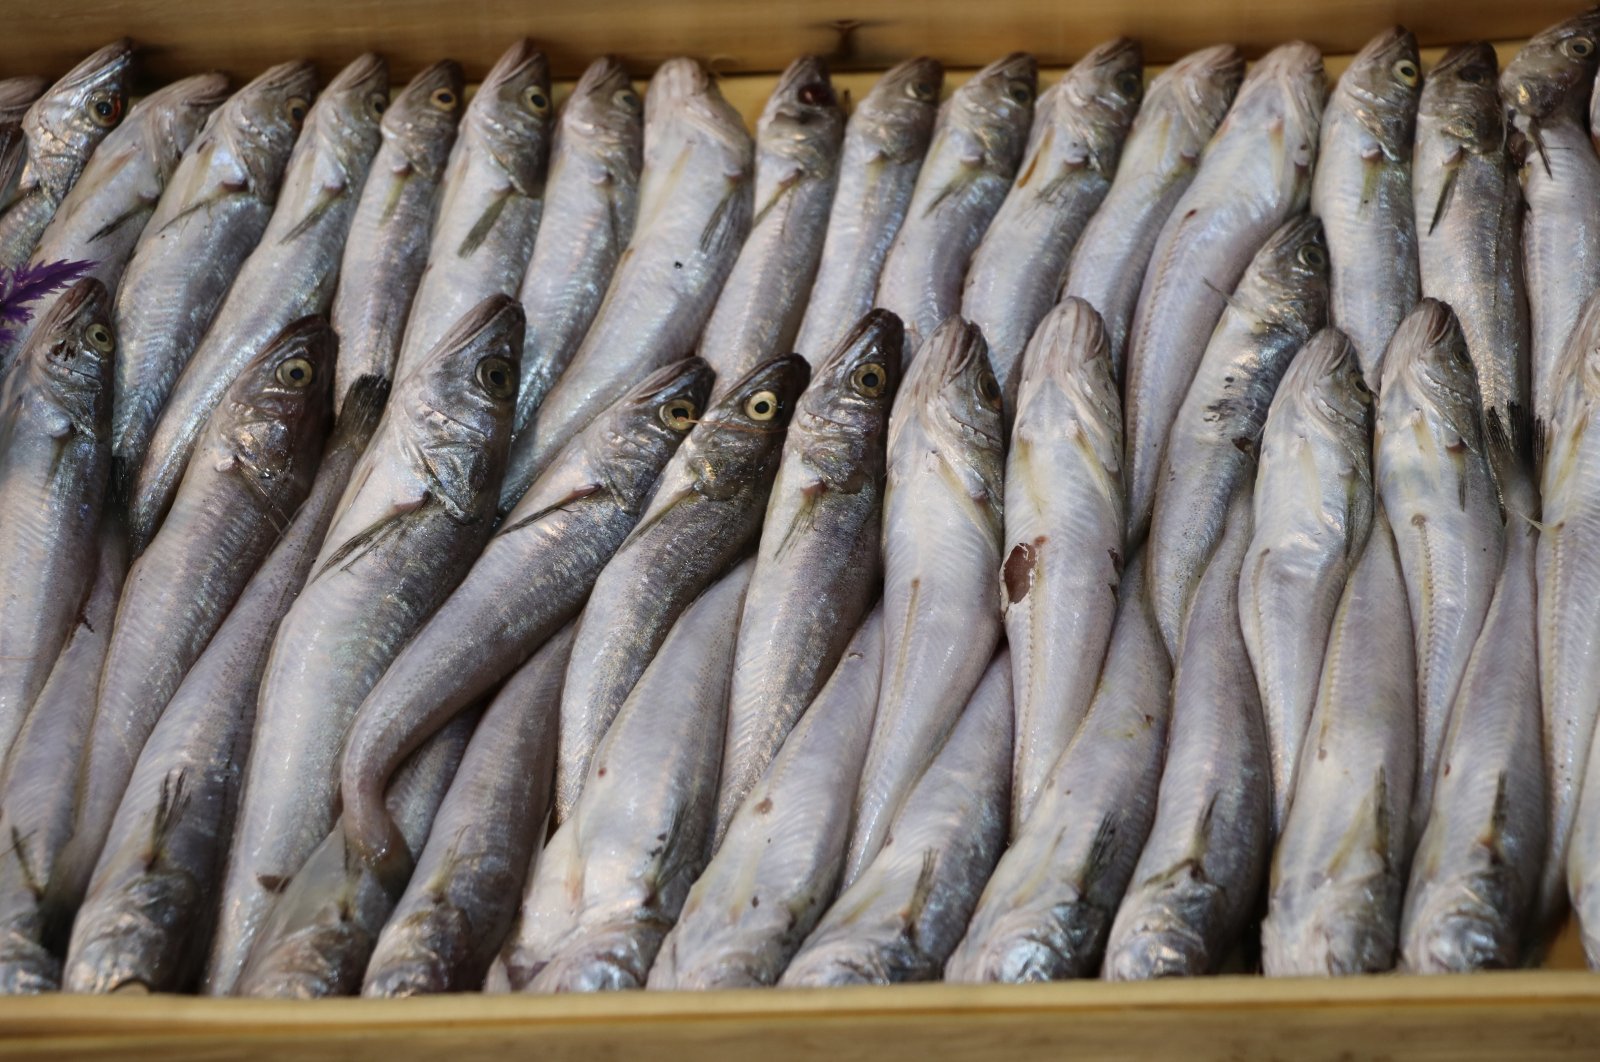 Türkiye lifts ban on fishing to boost fisheries, save biodiversity